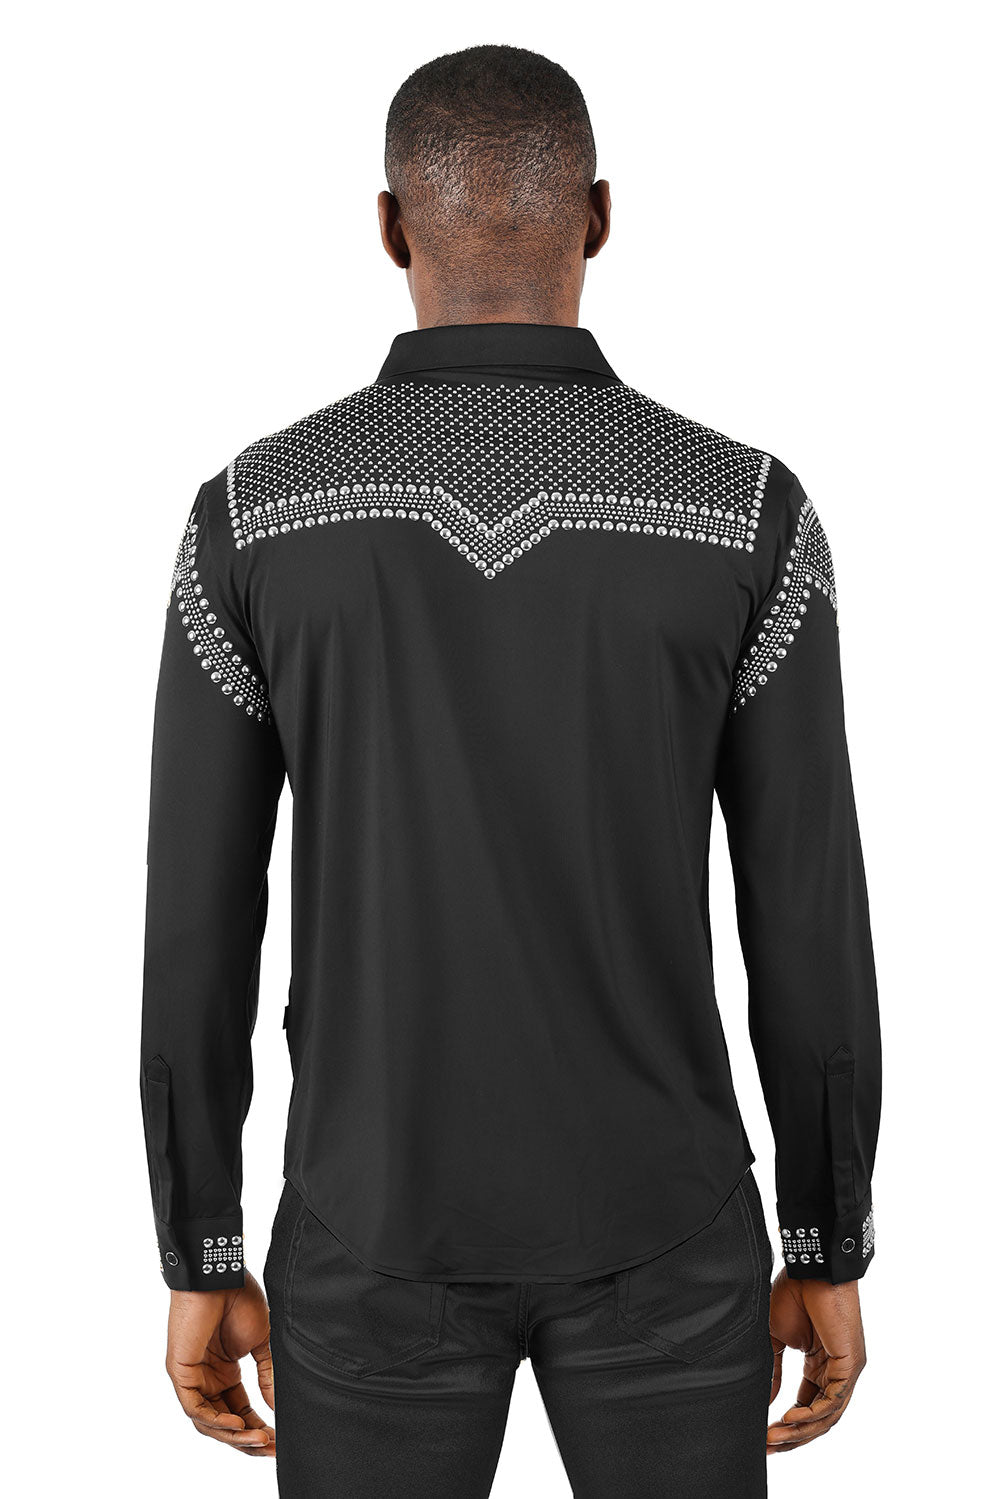 Barabas Men's Studded Premium Solid Long Sleeve Shirts 3B24 Black Silver